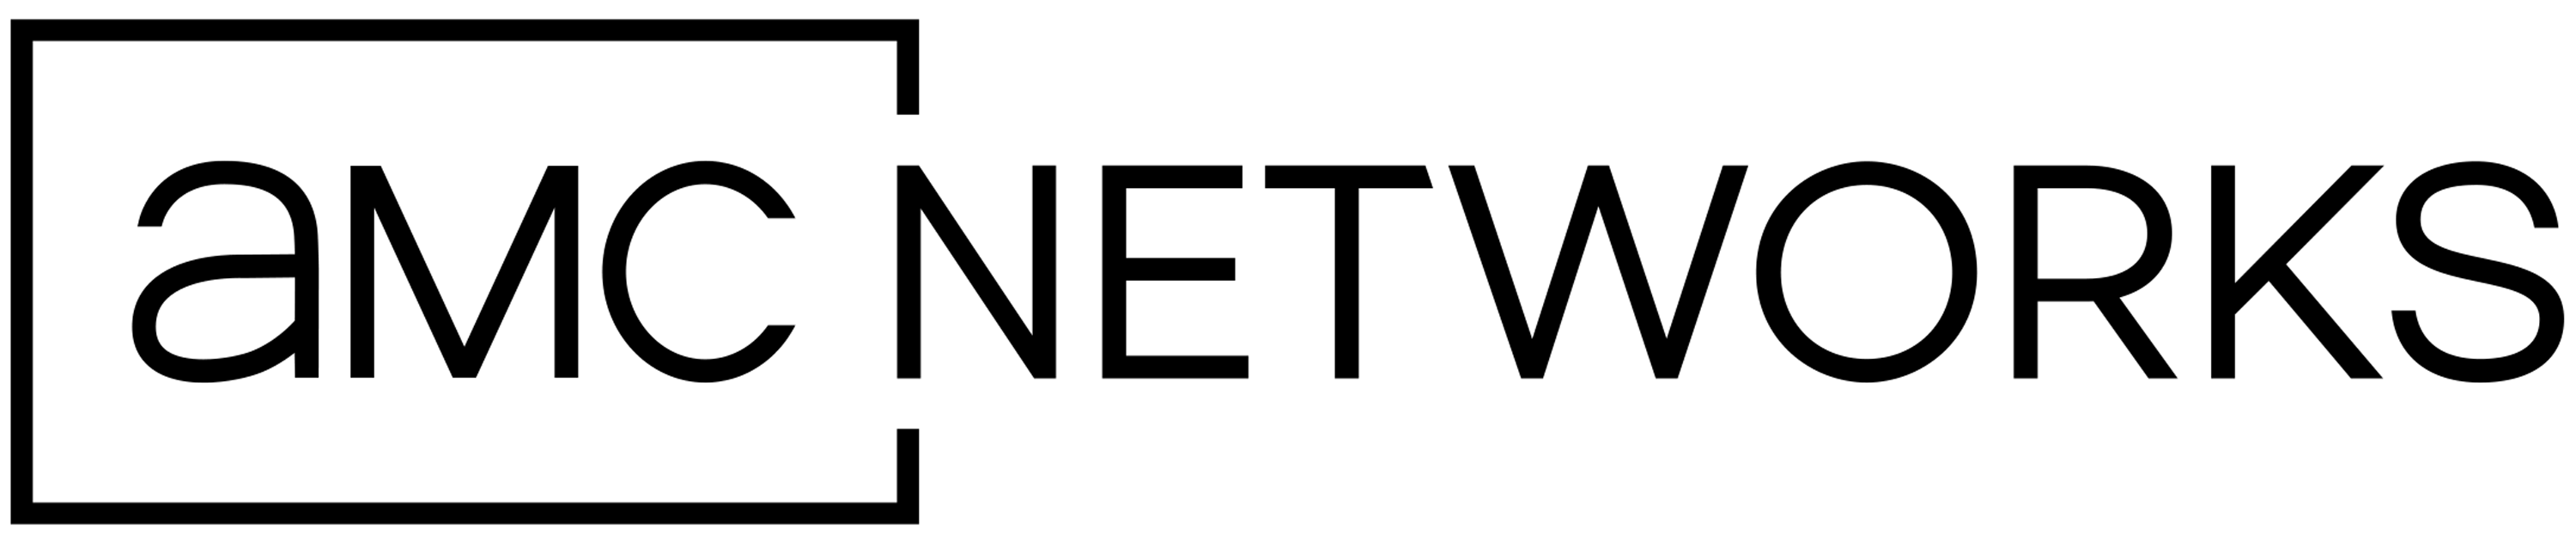 AMC Networks InSites logo